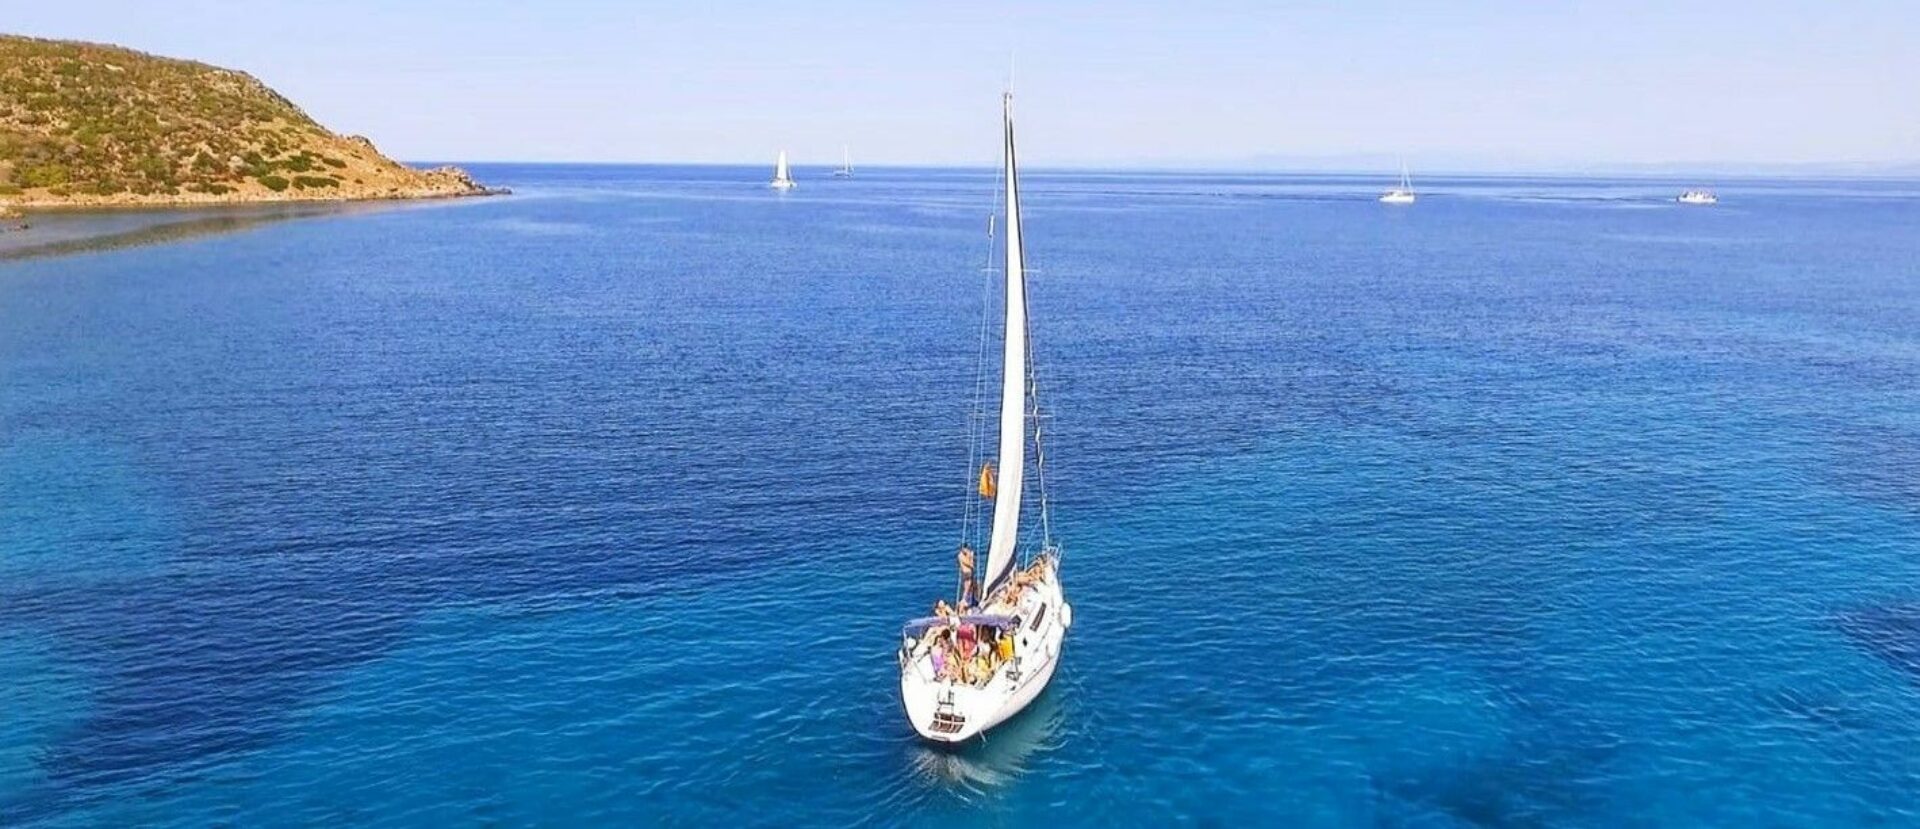 Escursioni in barca a vela Asinara